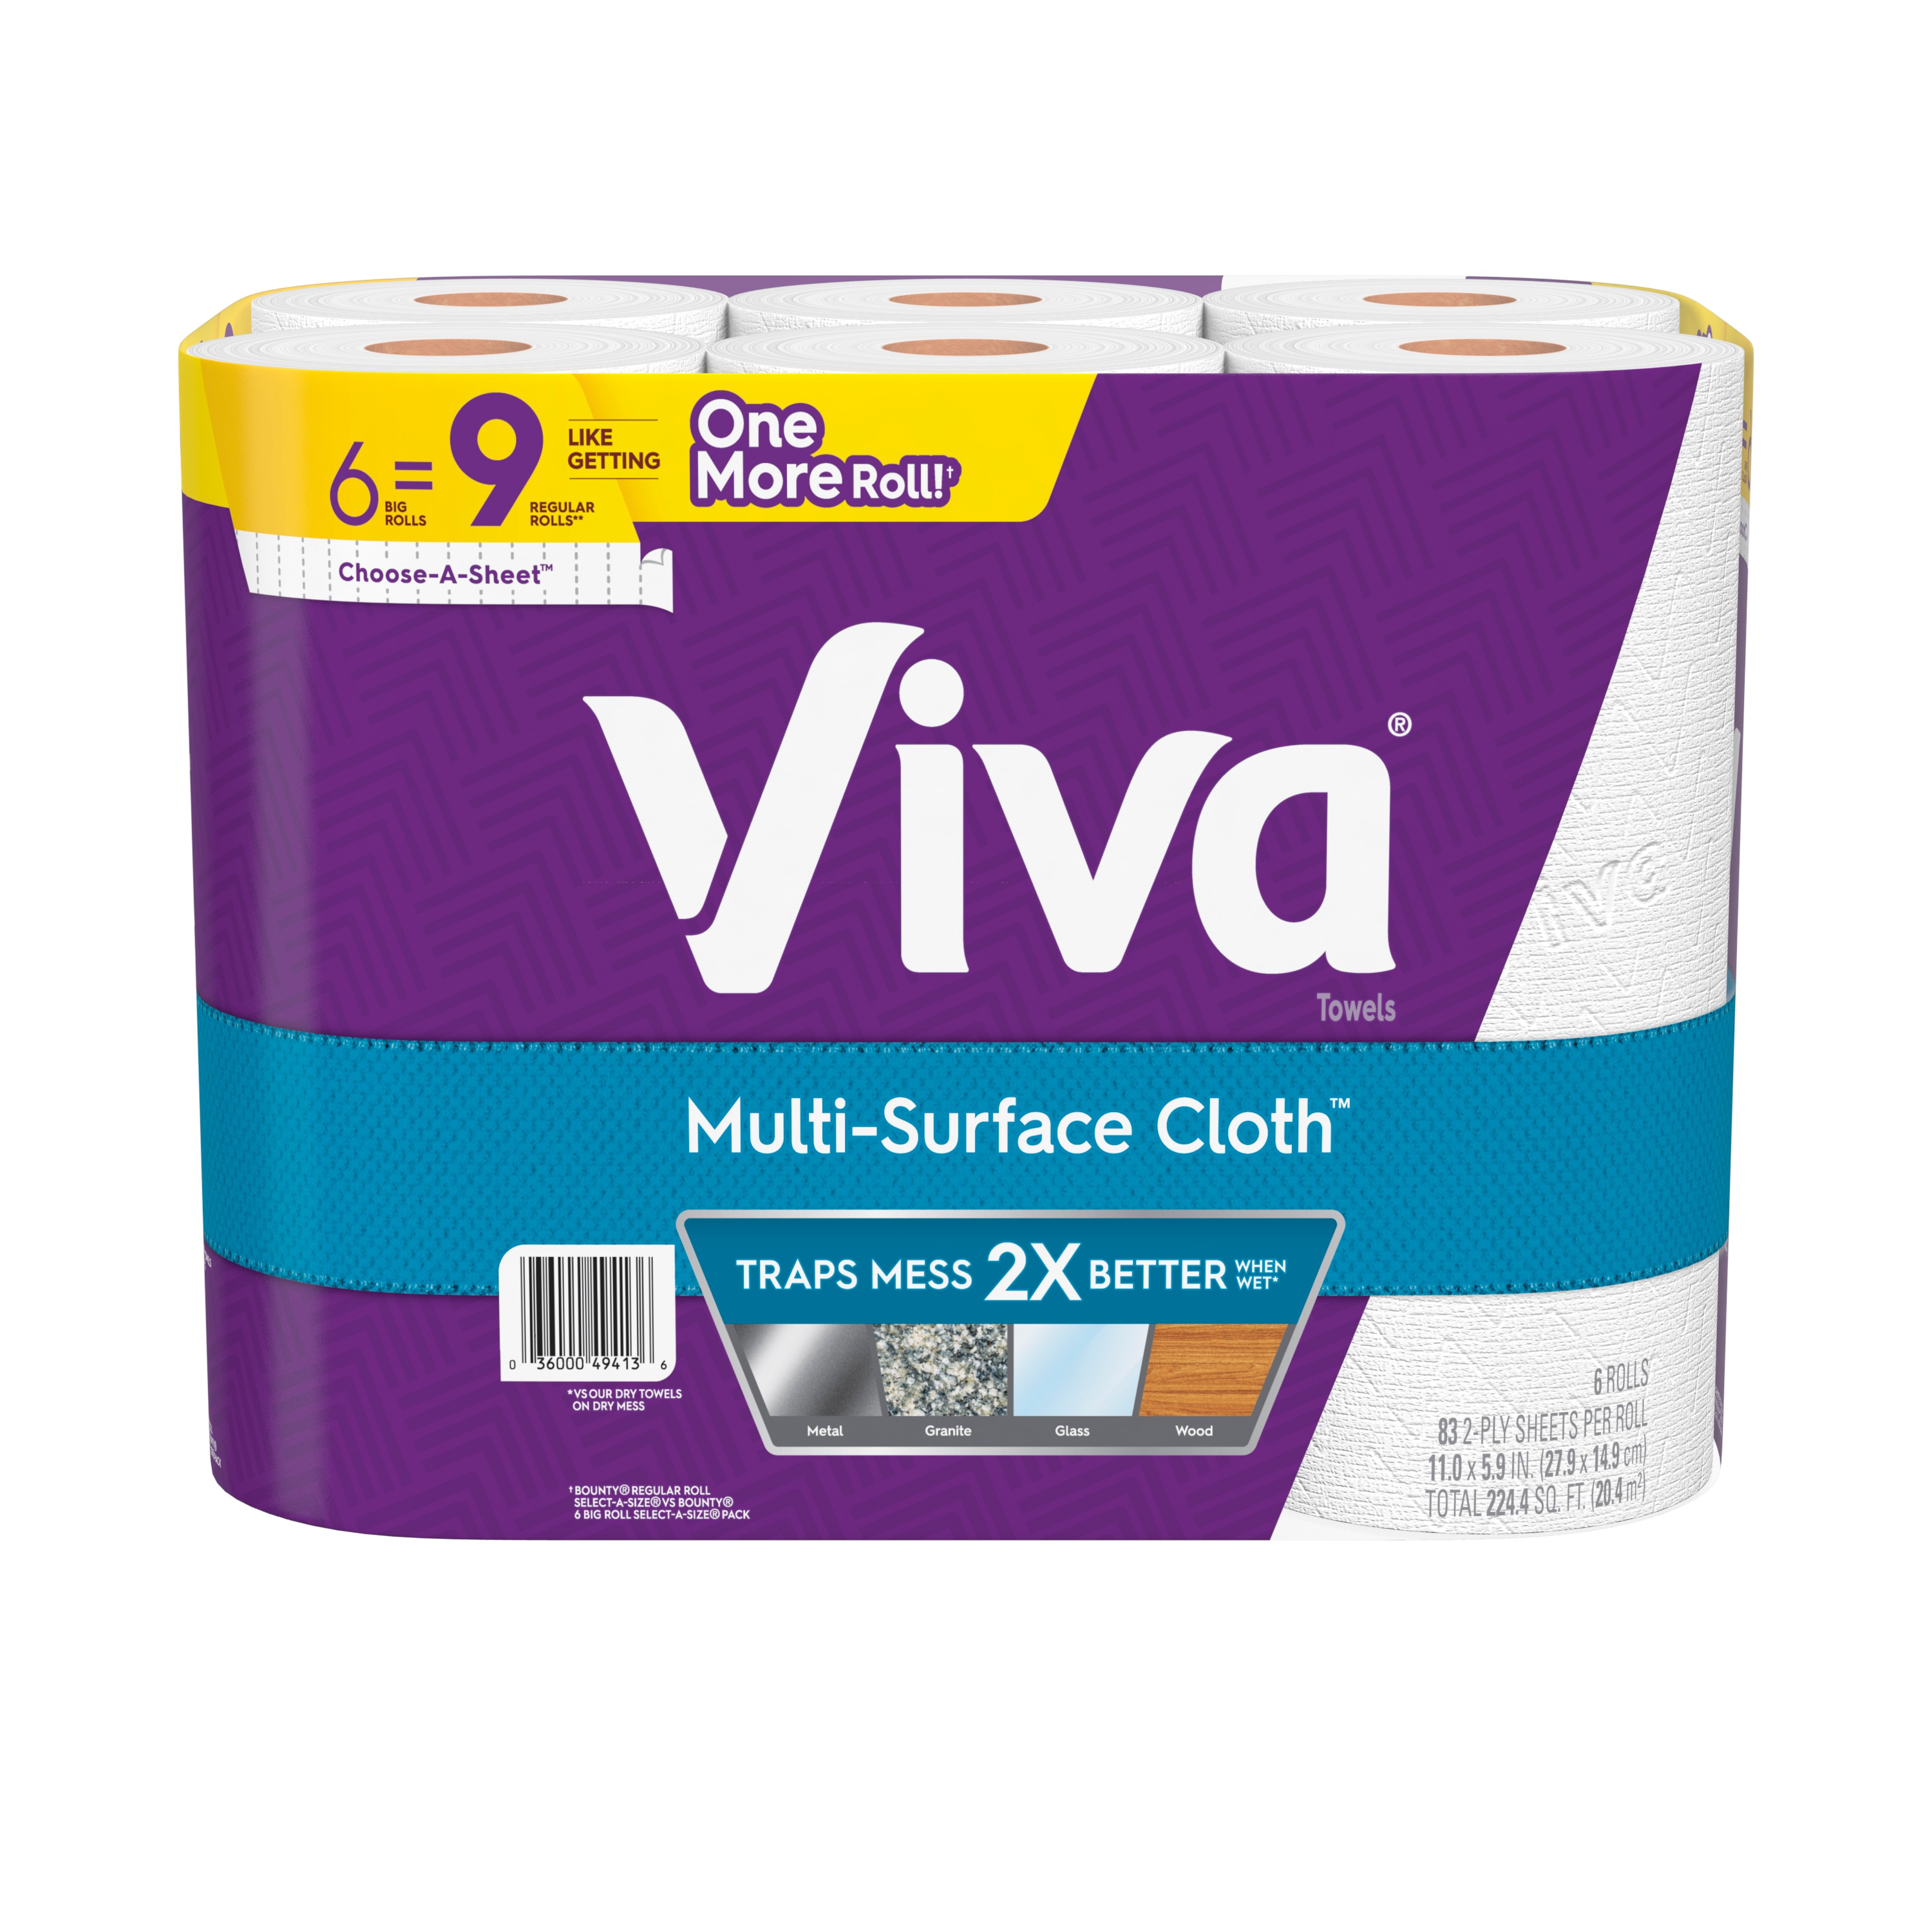  Viva Multi-Surface Cloth Paper Towels, Task Size - 12